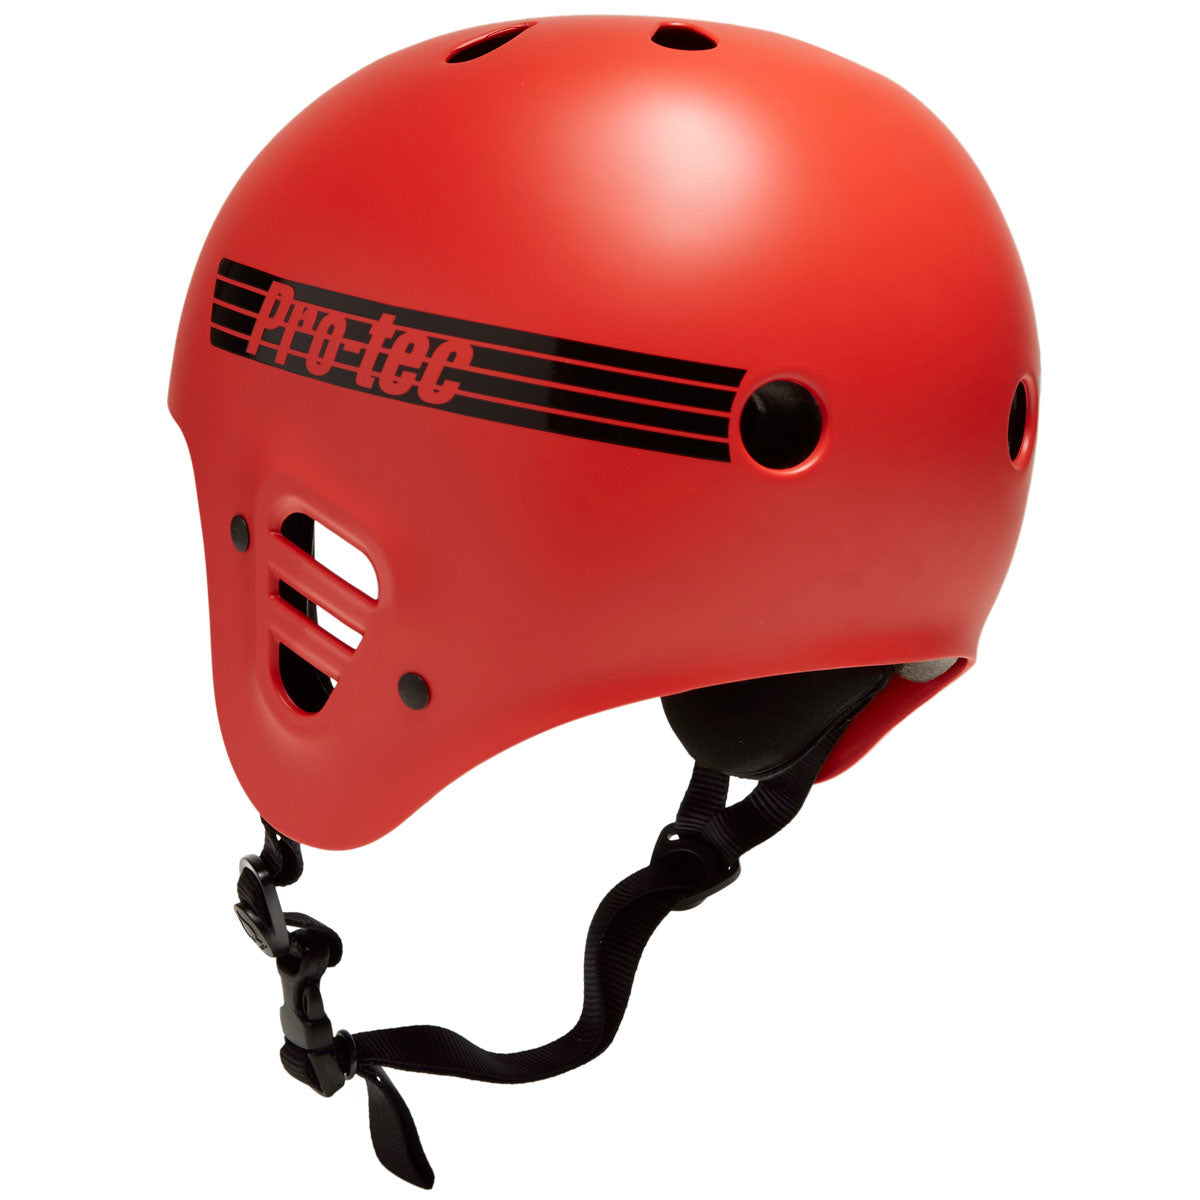 Pro-Tec Full Cut Certified Helmet - Matte Bright Red image 2